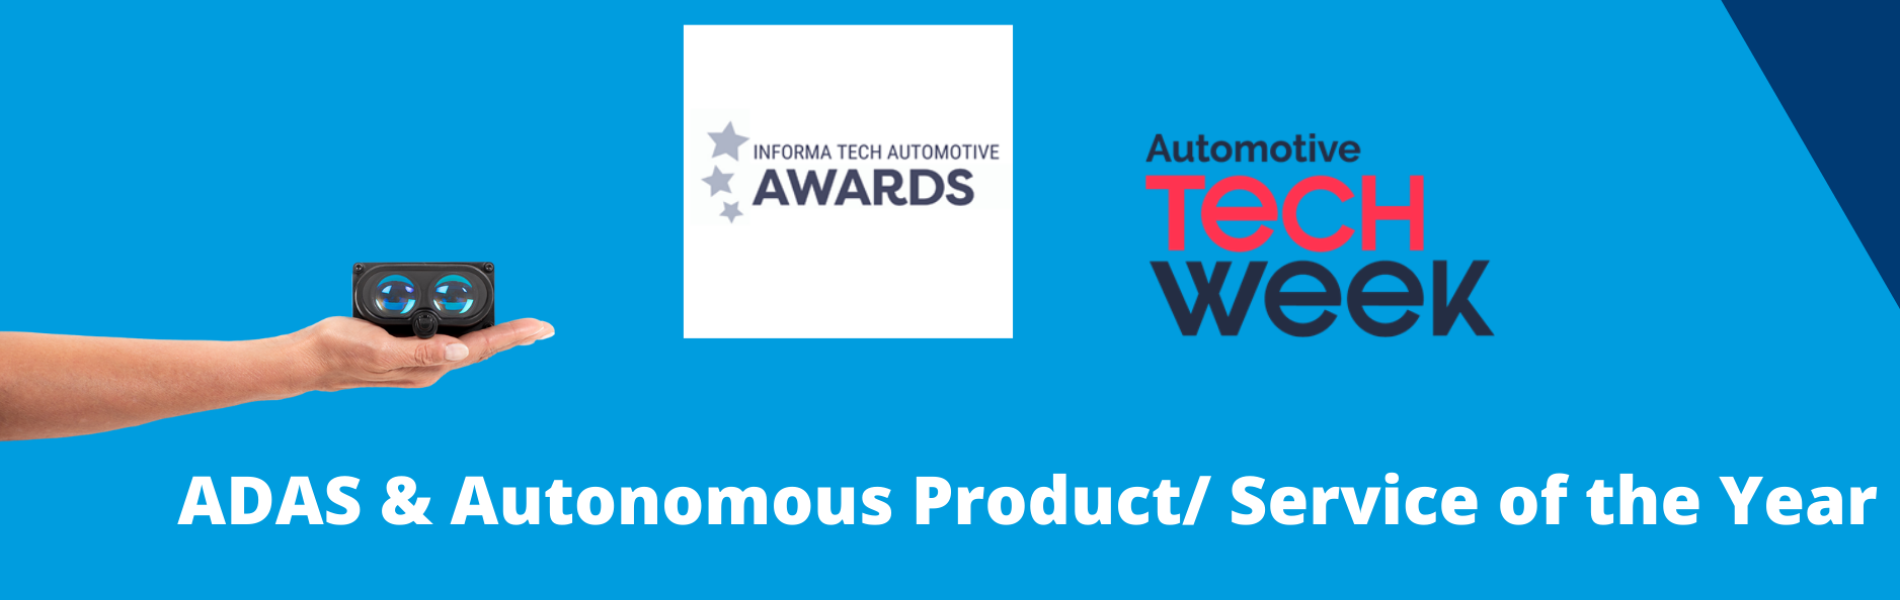 FINALIST Tech Automotive Awards_XenomatiX